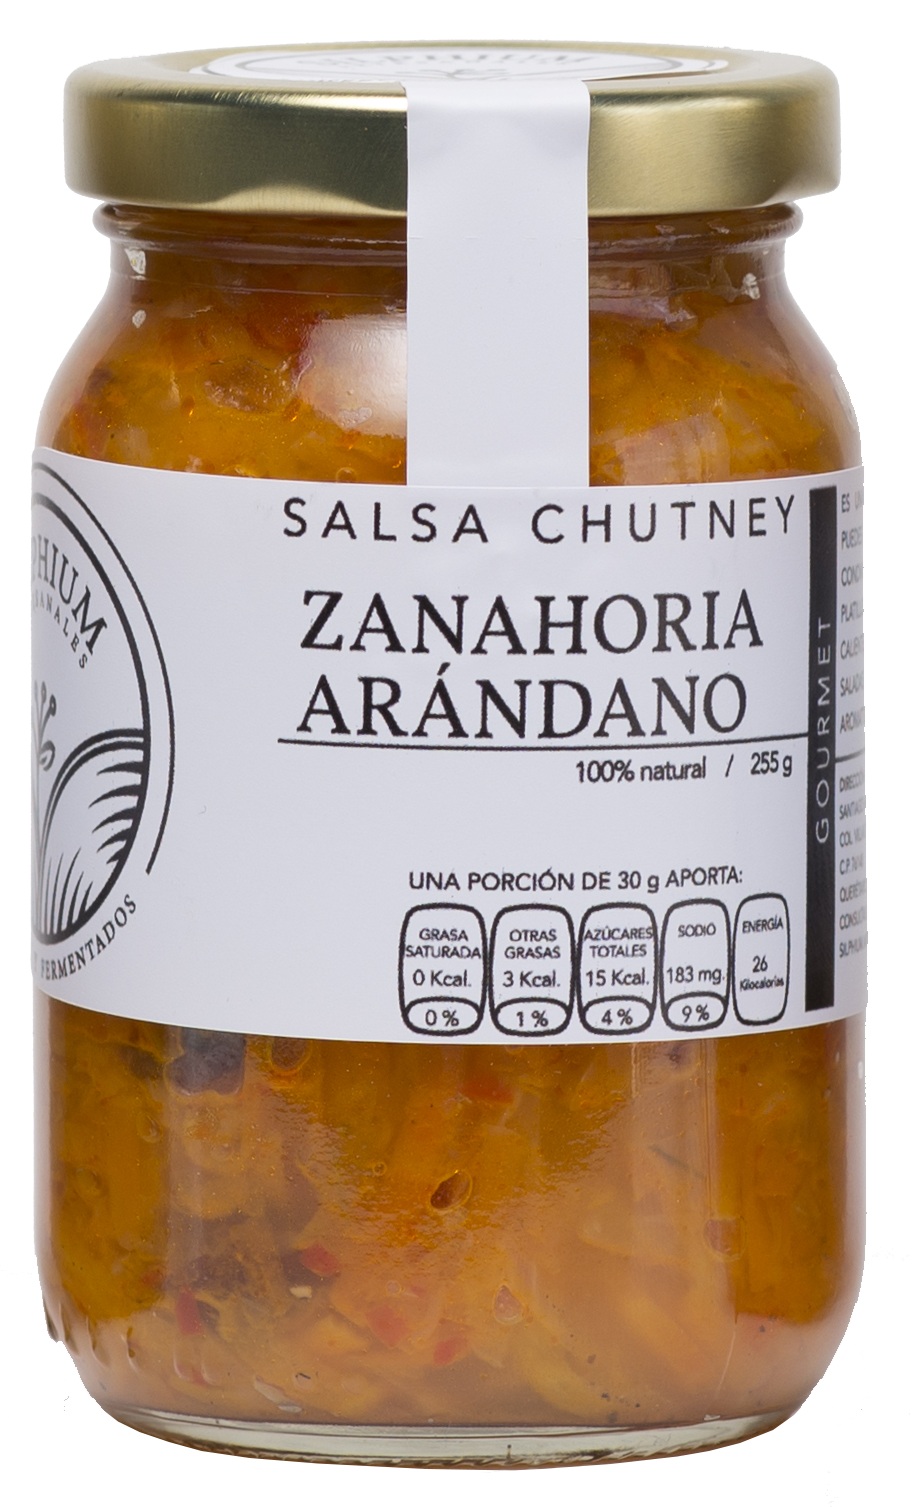 Salsa Chutney Zanahoria Arándano (Silphium) 255 g